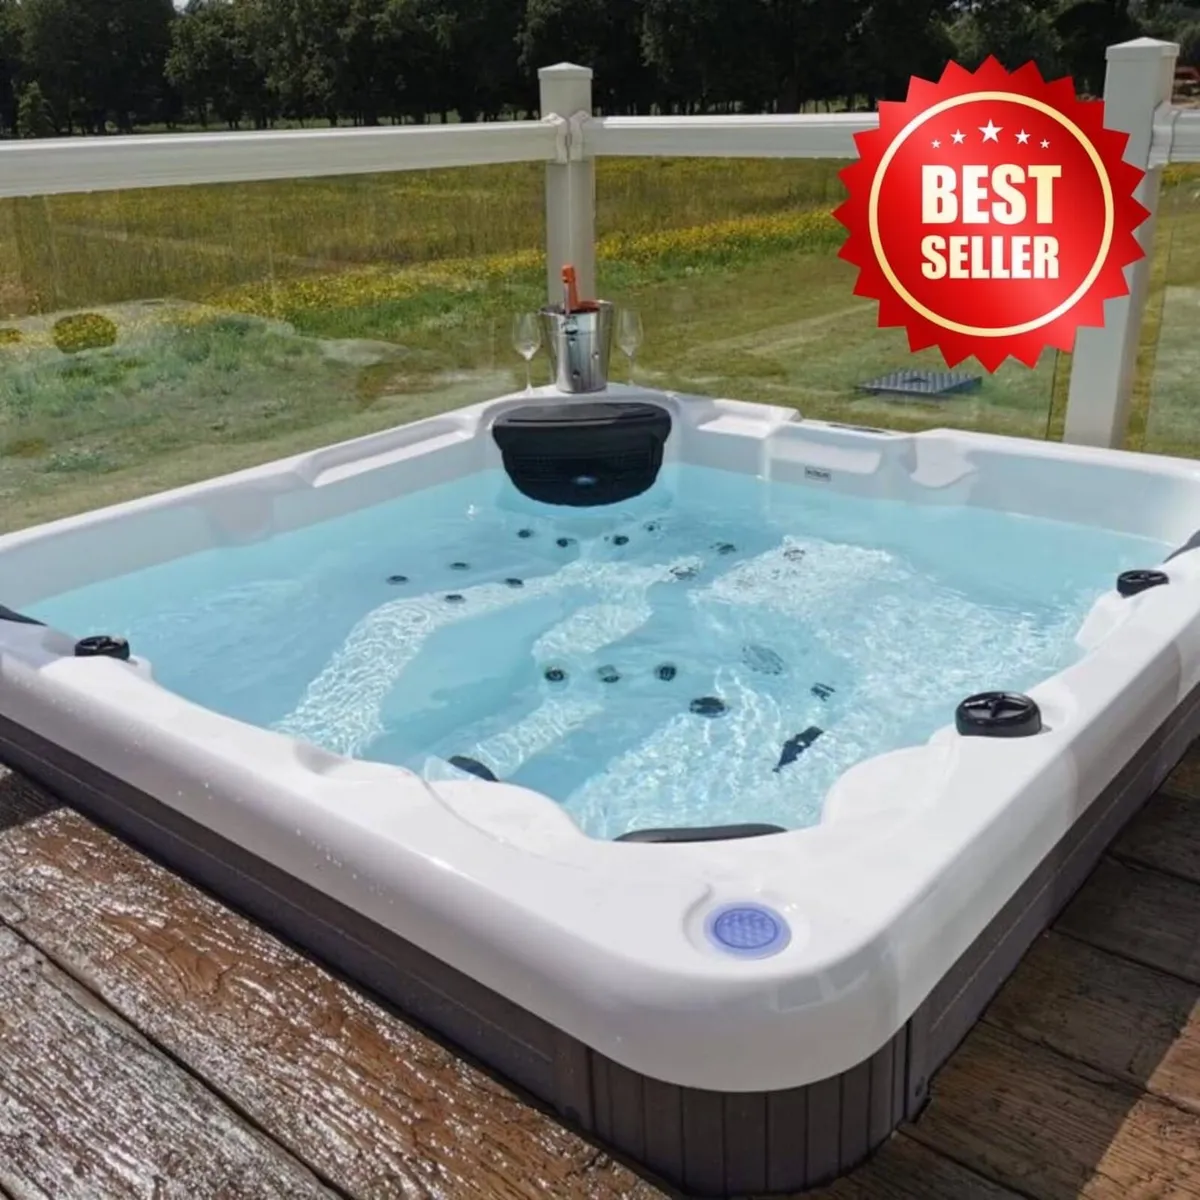 £1500 Off This Luxury Hot Tub - Image 1